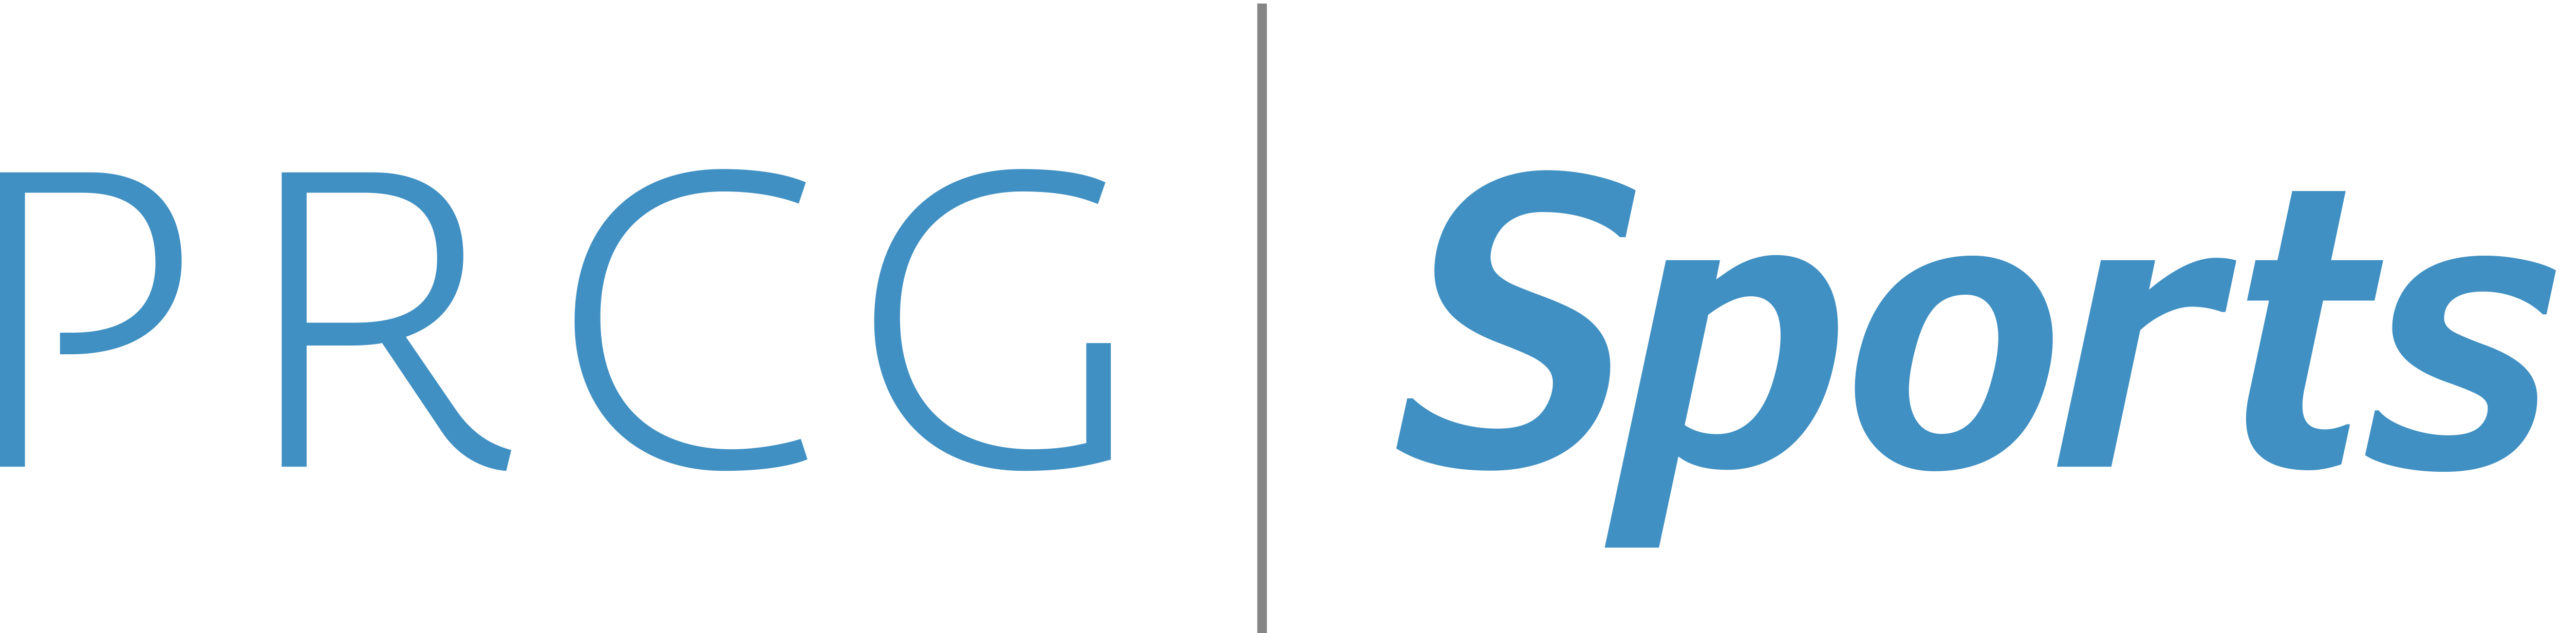 PRCG_Sports-Logo-CMYK.jpg